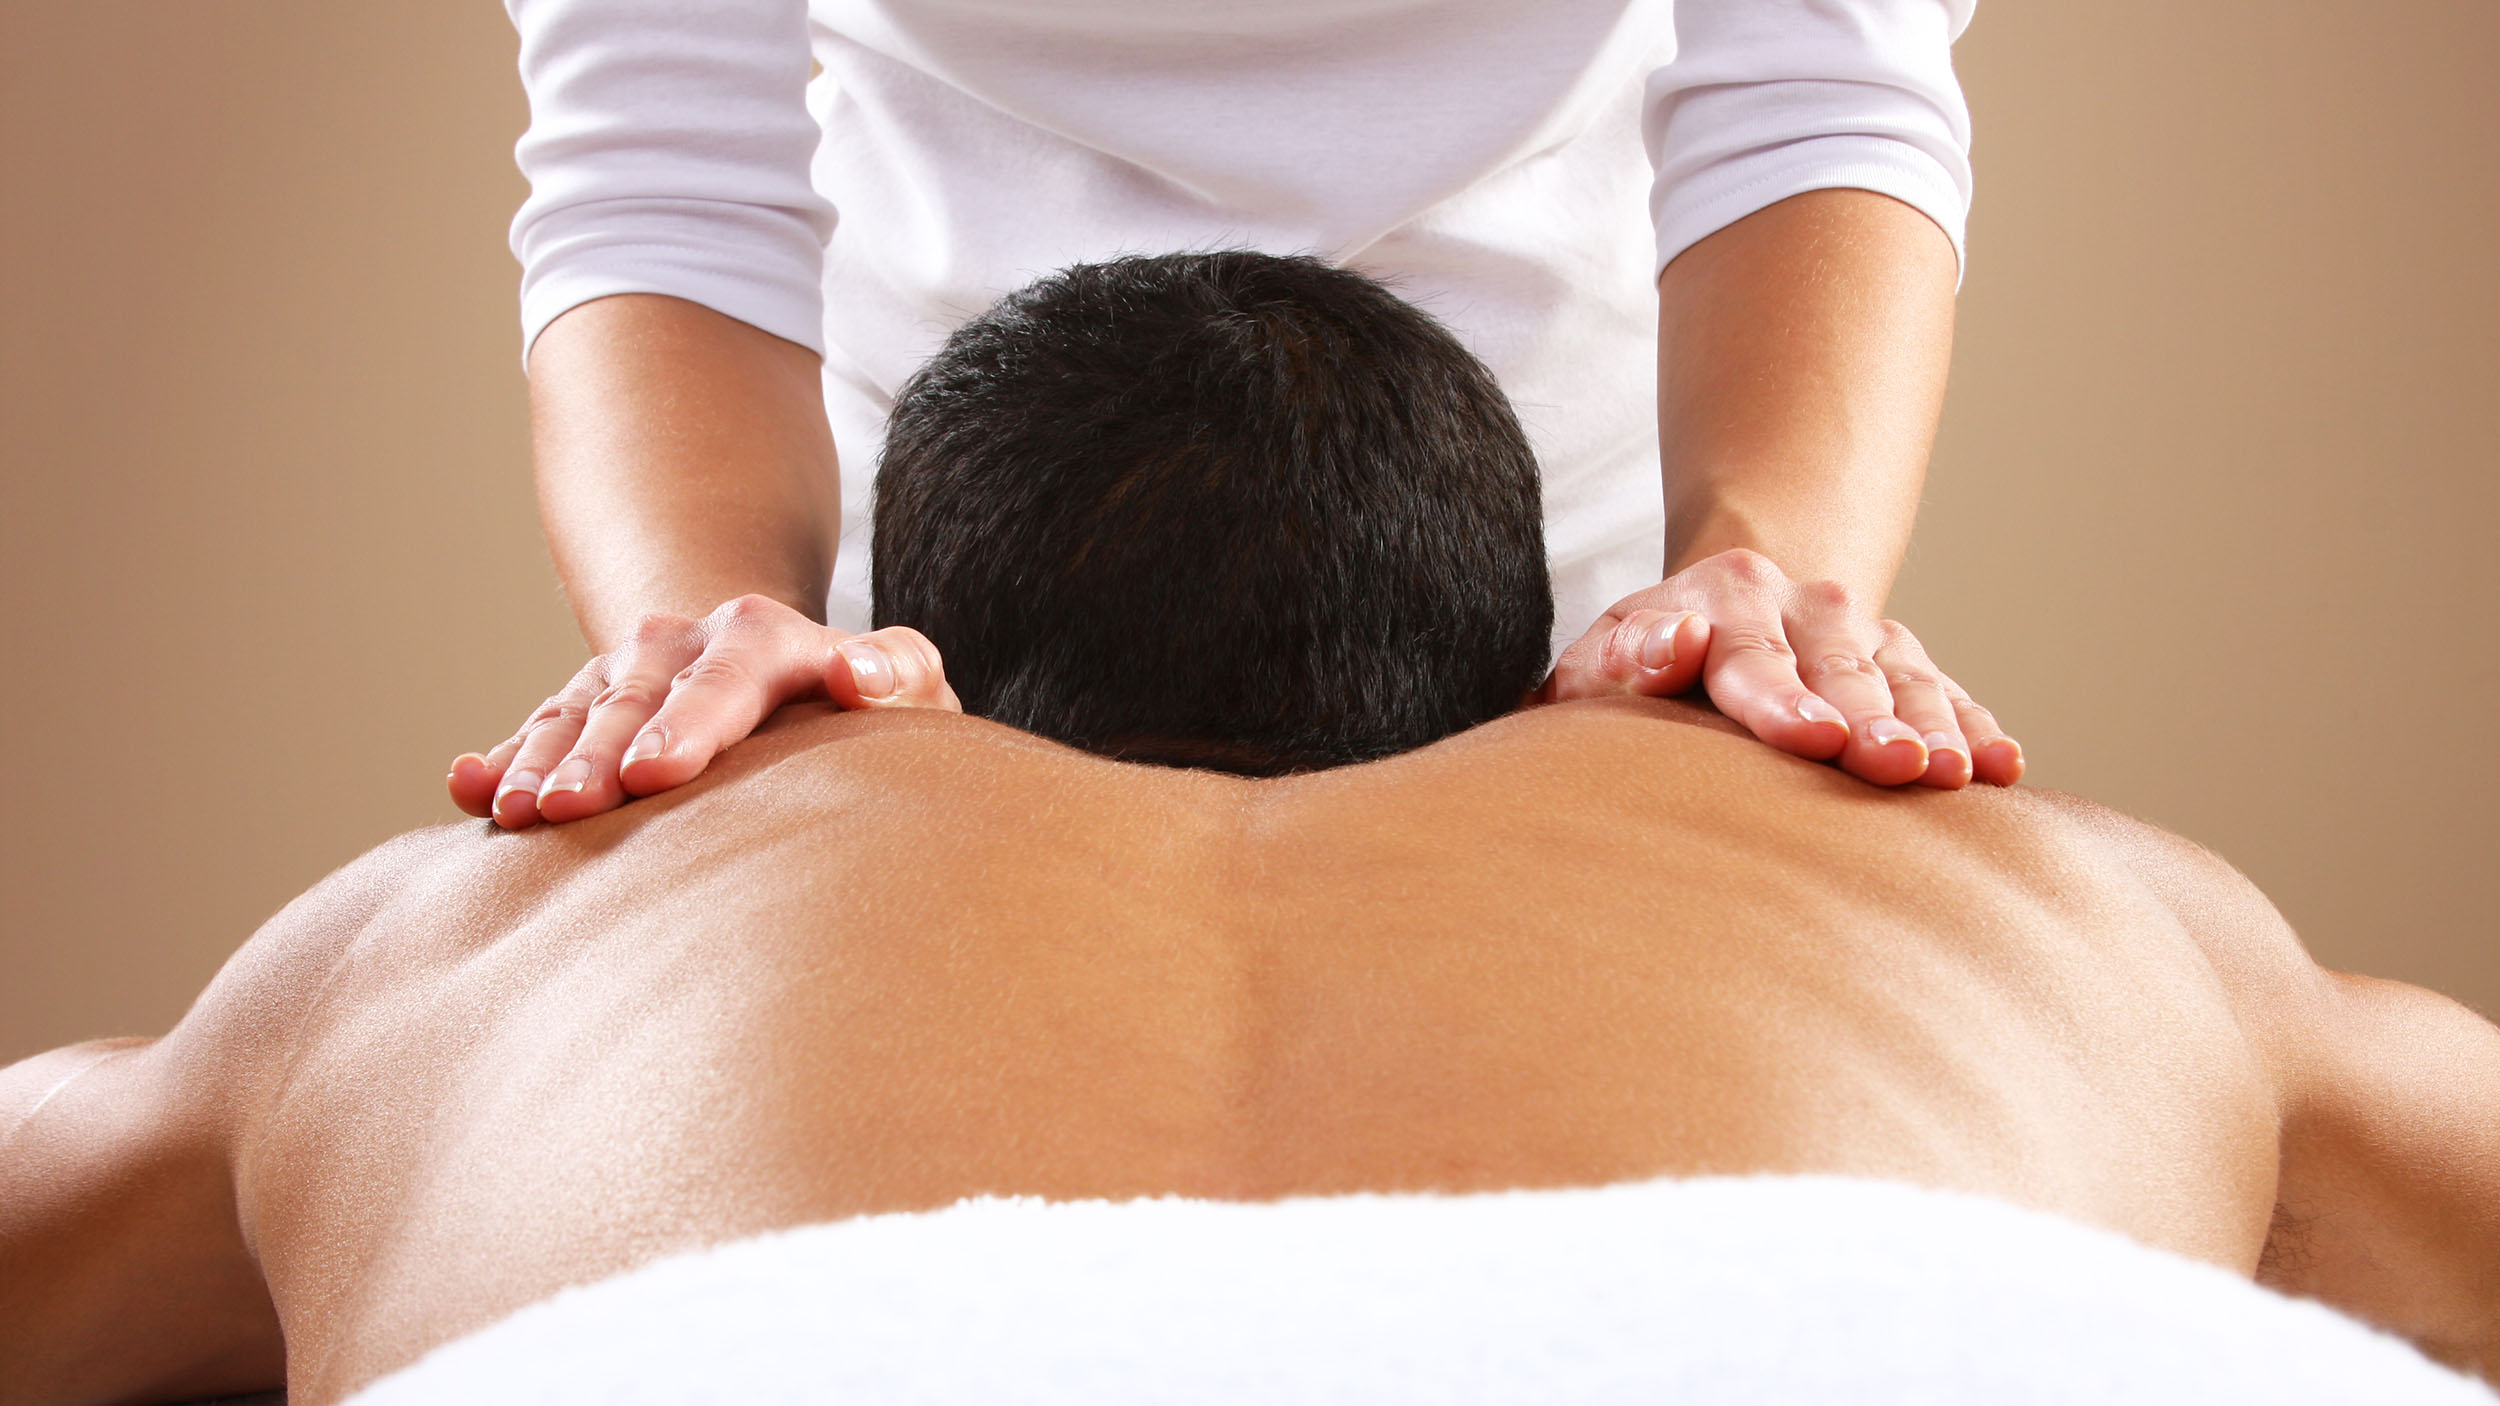 Mp4 massage. Массаж спины. Общий массаж. Массаж мужской спины. Классический массаж спины.